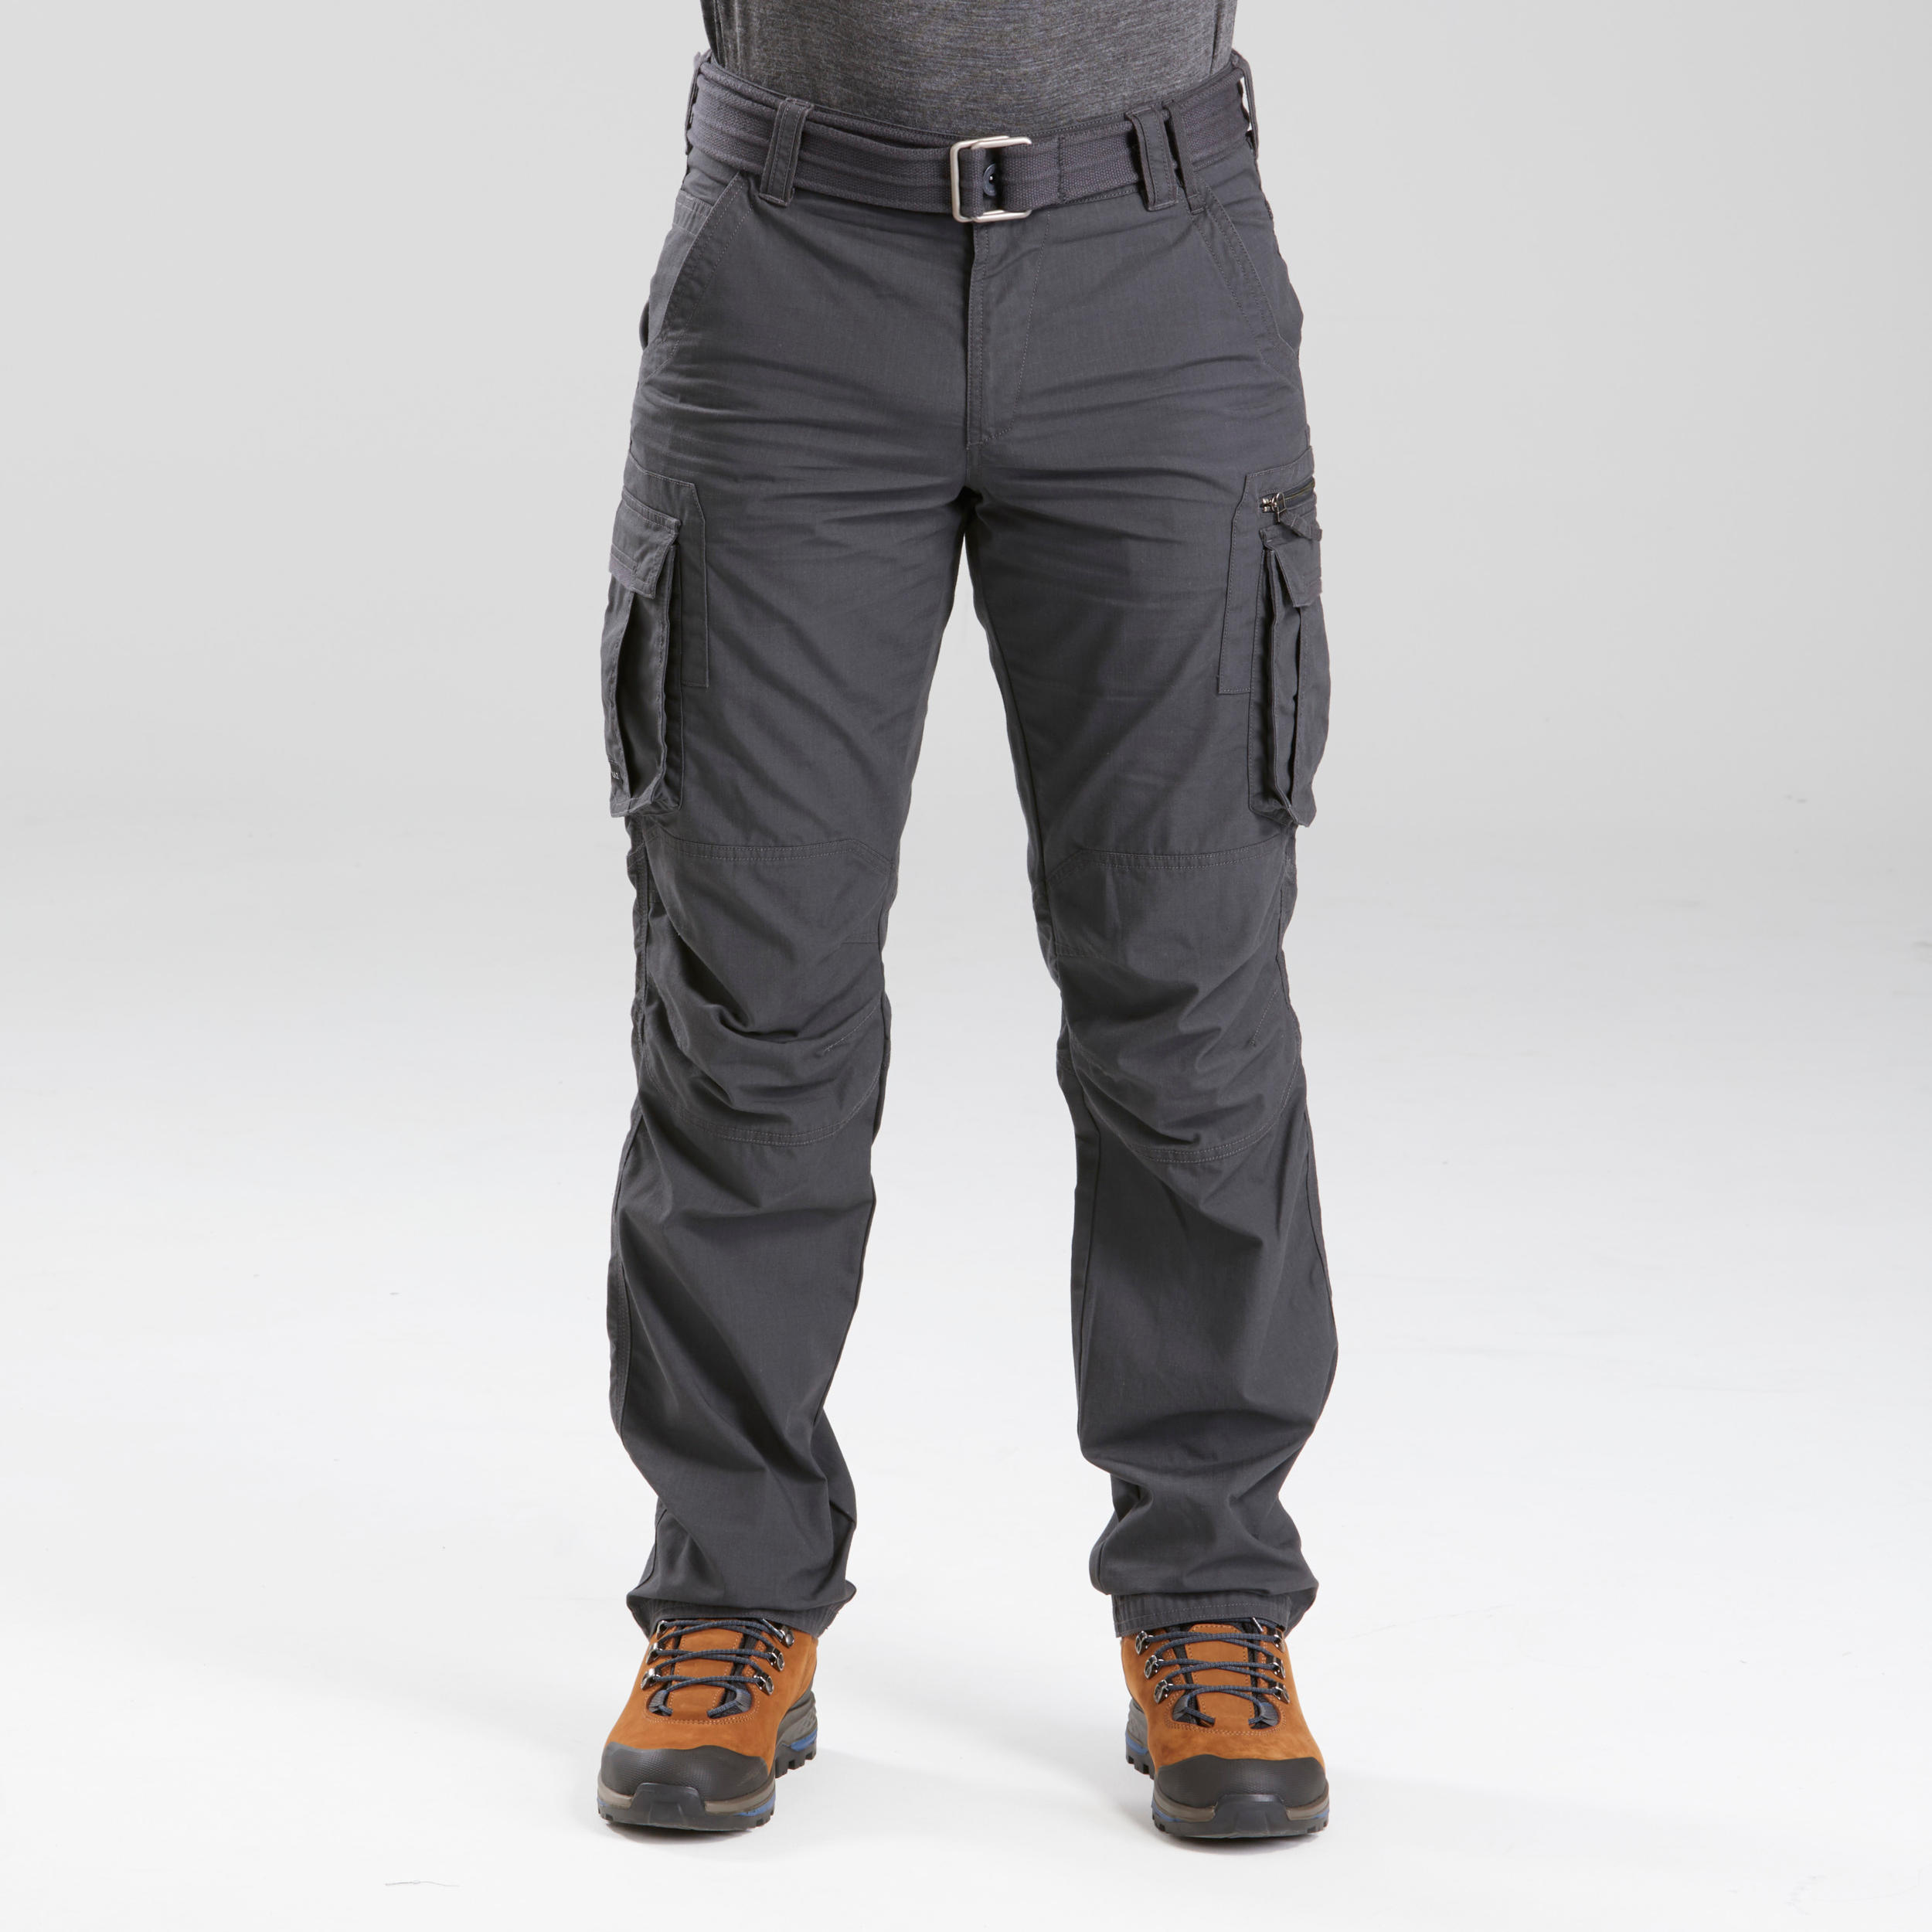 Buy Sapper 6 Pocket Trekking Cargo Pants - Black online